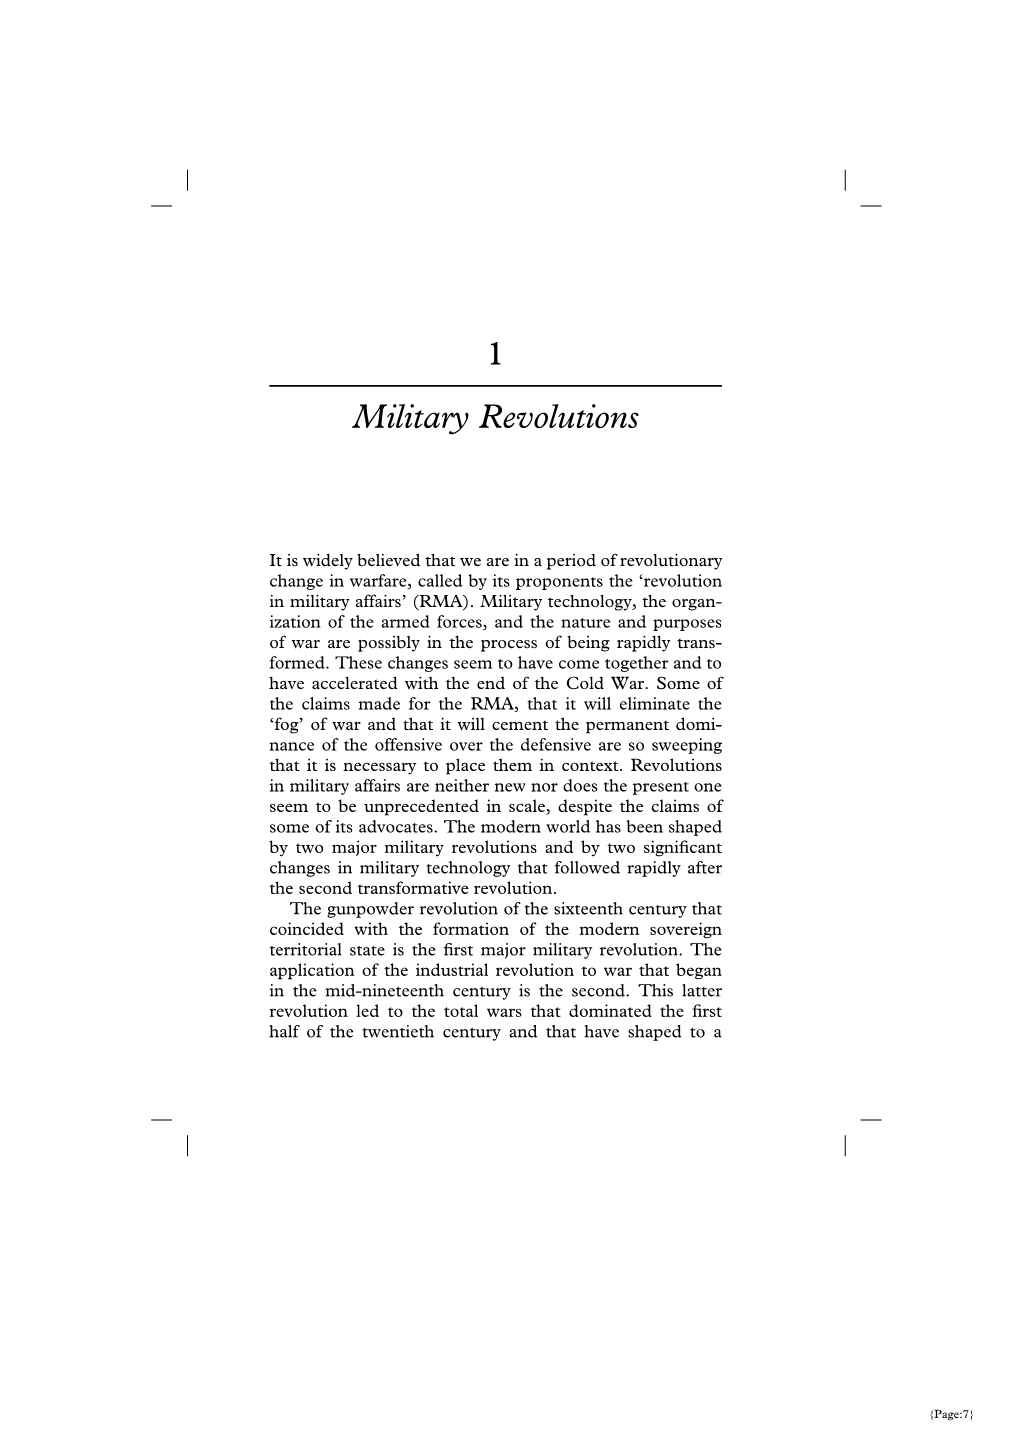 1 Military Revolutions